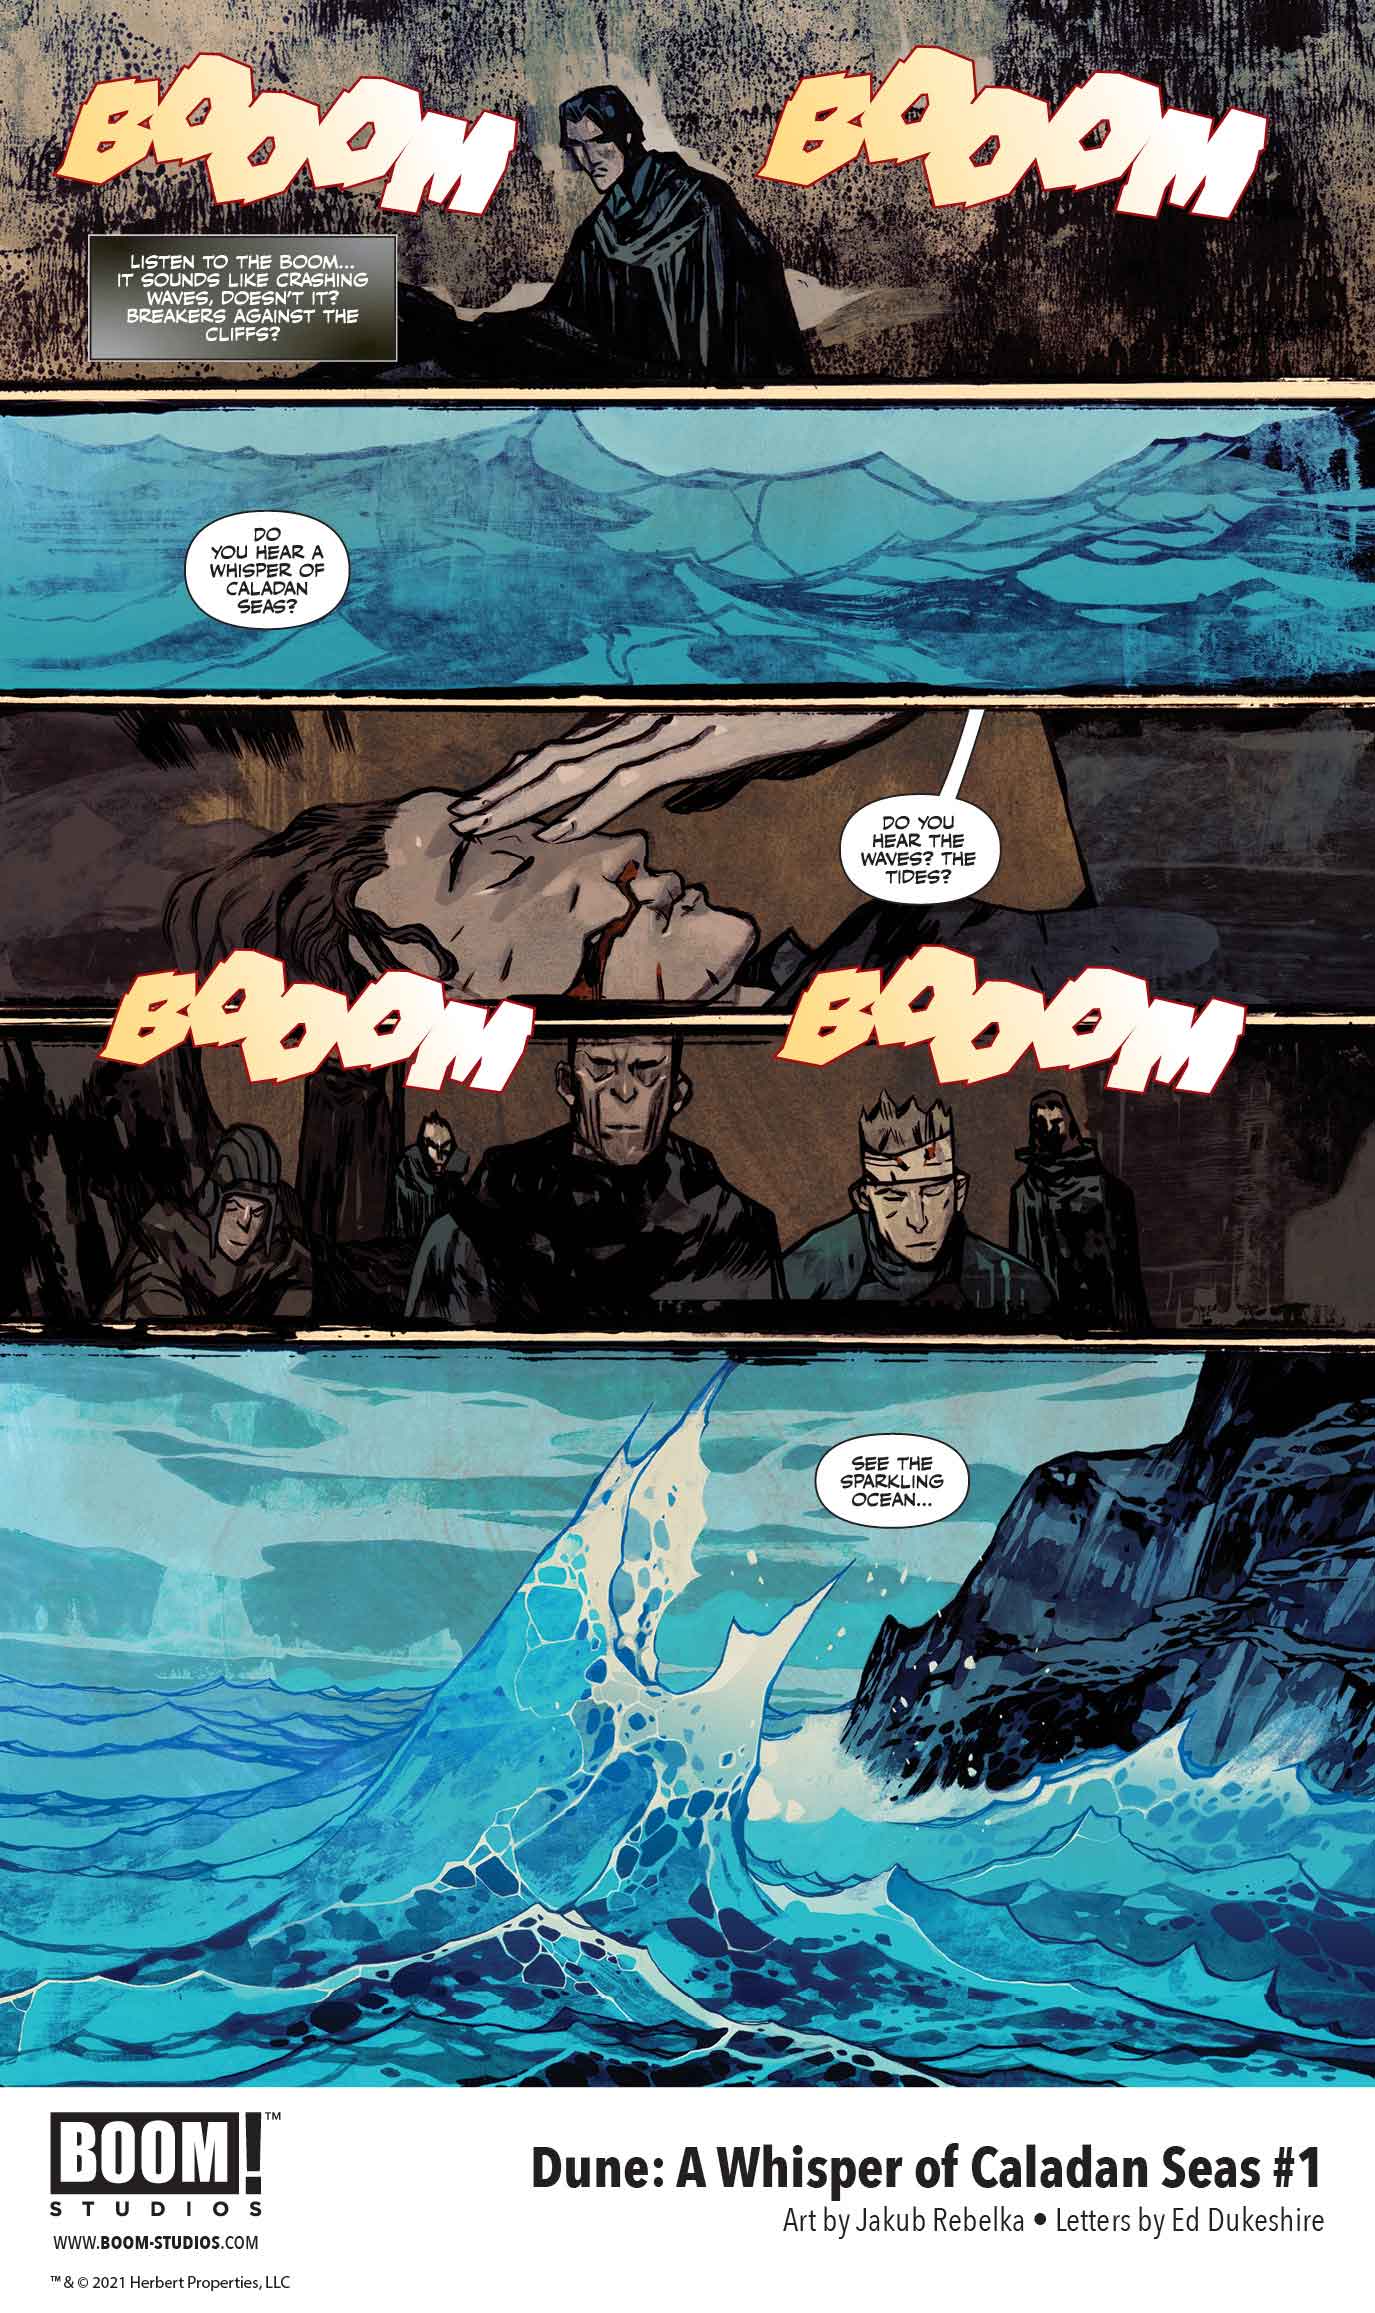 'Dune: A Whisper of Caladan Seas' comic book, page 7.